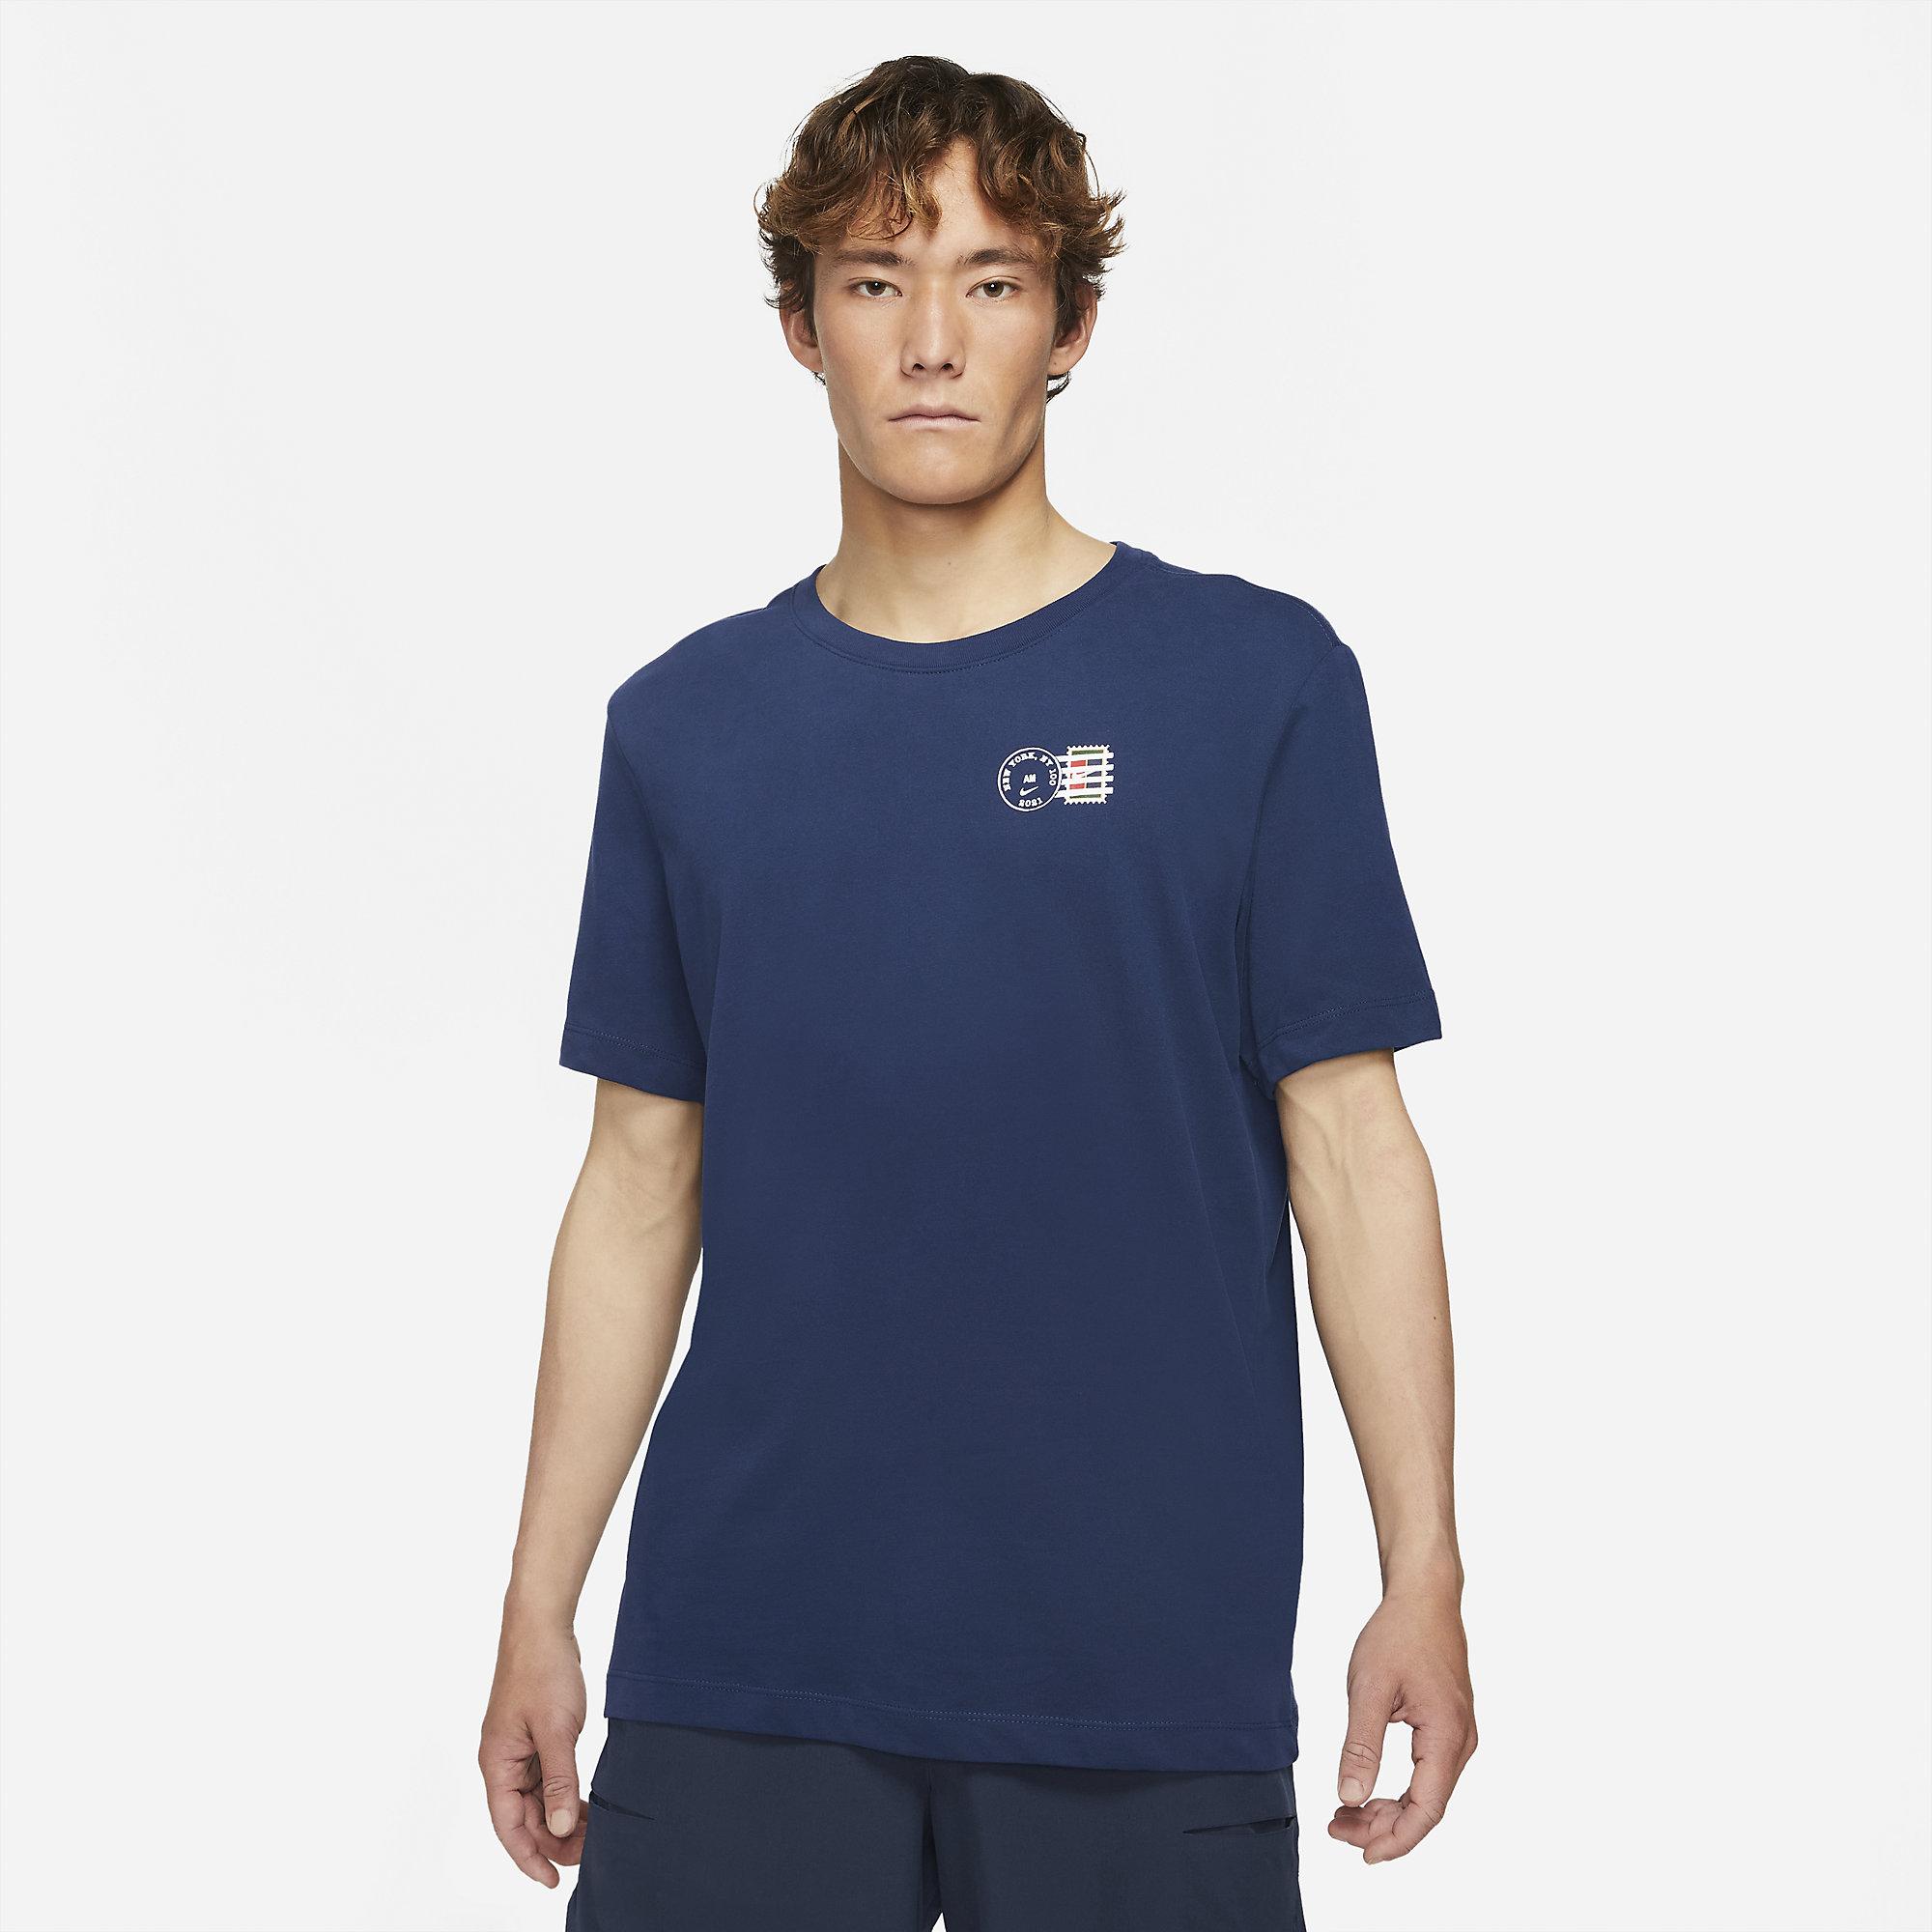 Nike Mens Tennis T-Shirt - Navy Blue - Tennisnuts.com